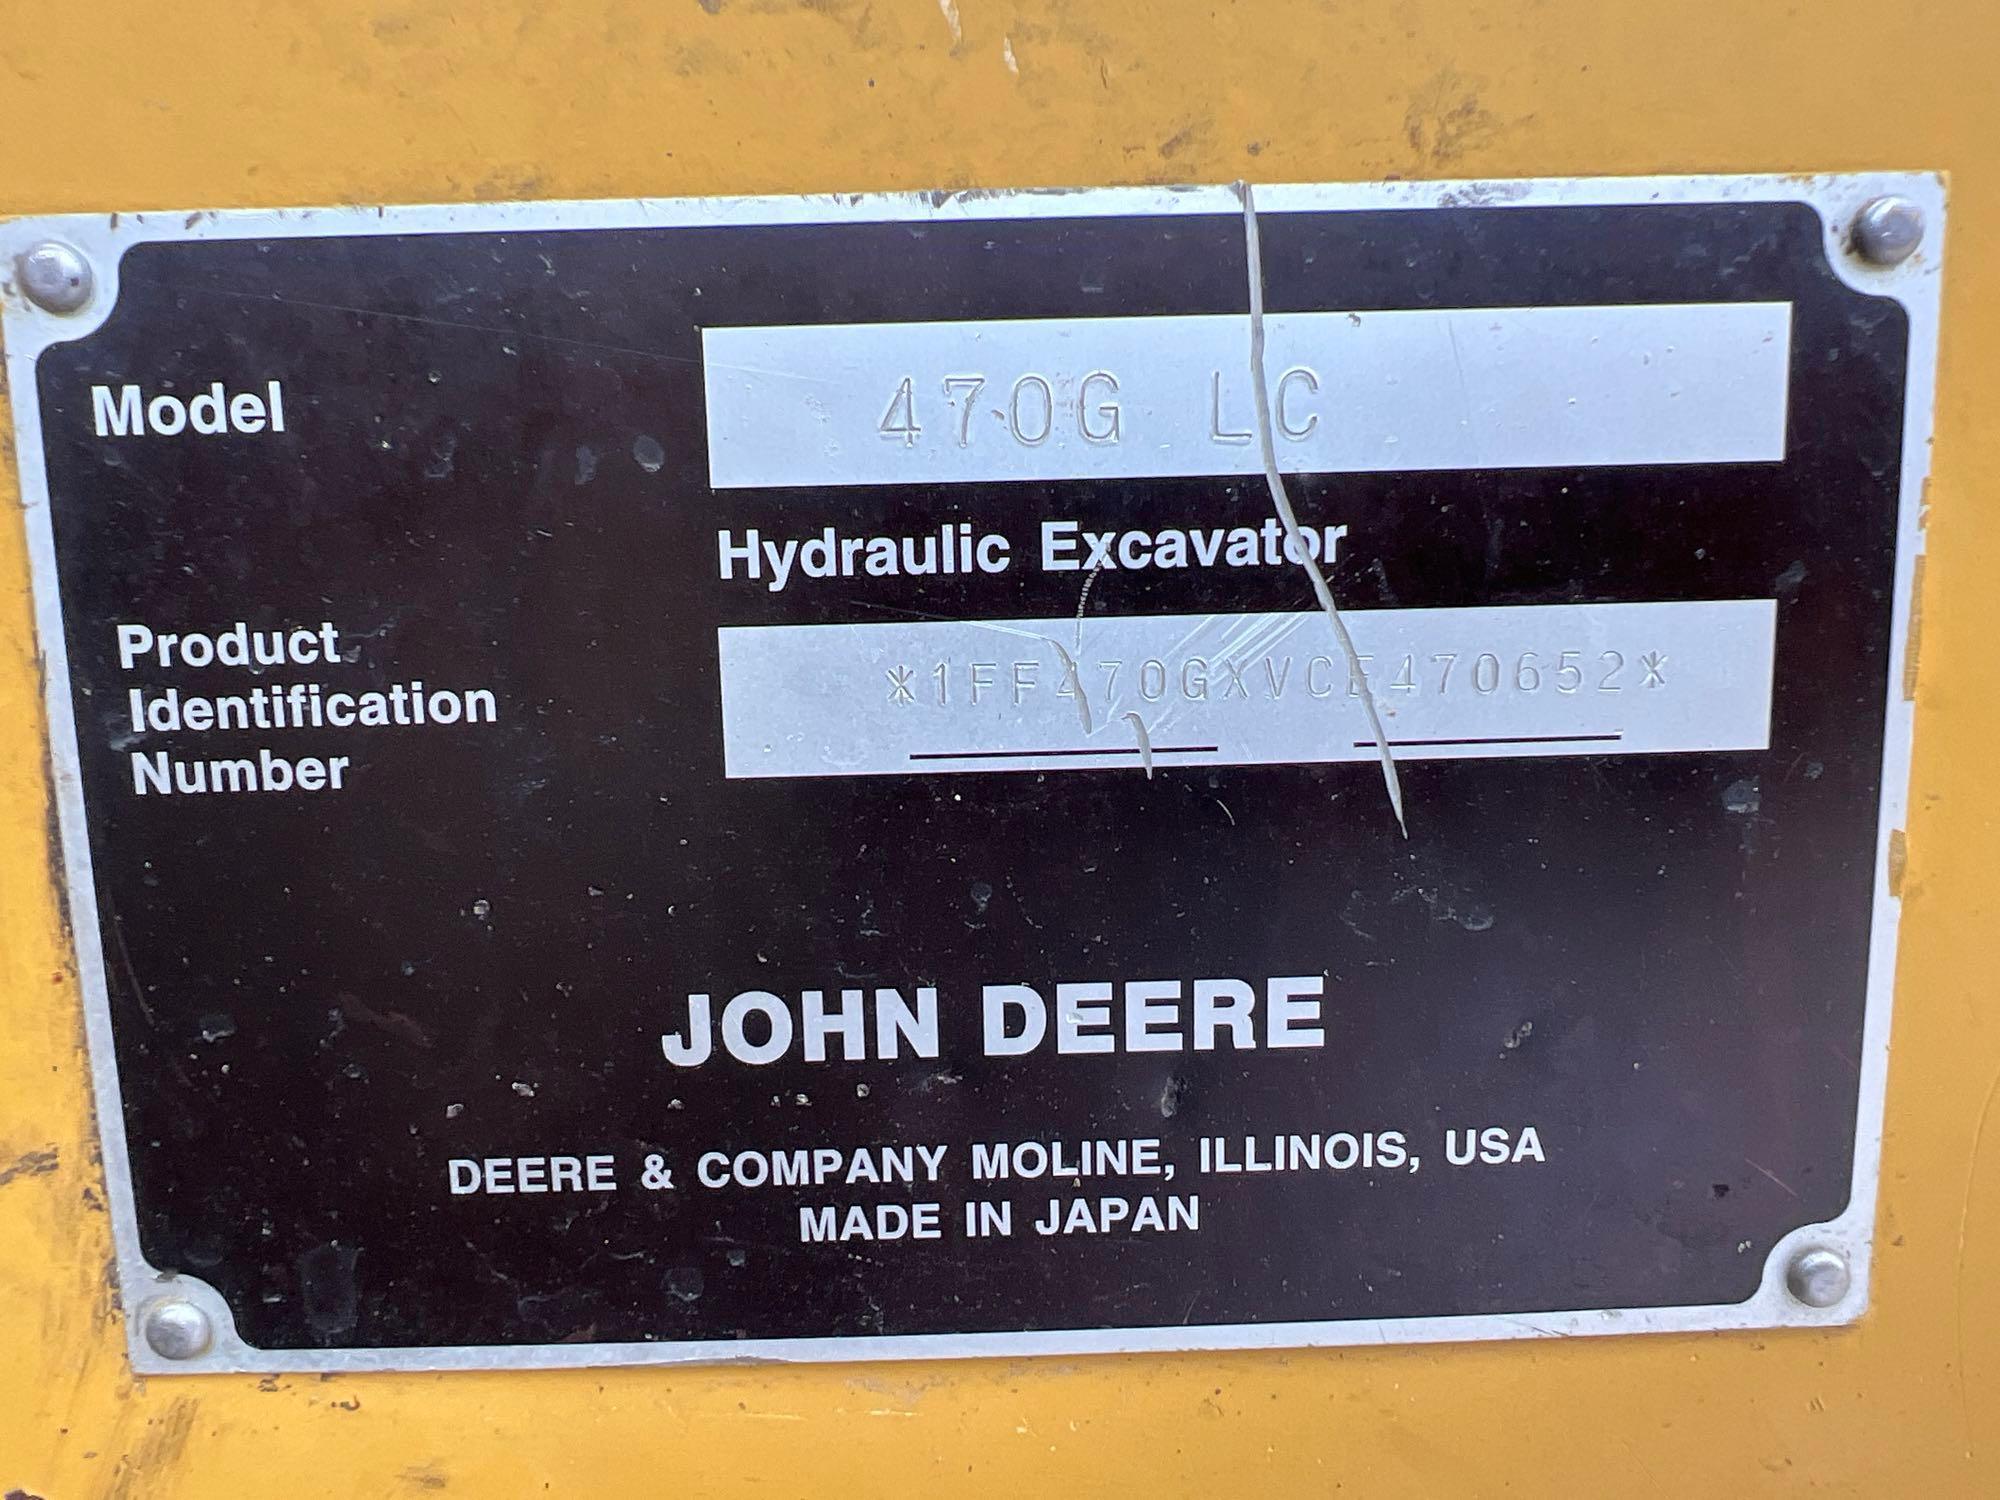 2014 JOHN DEERE 470GLC HYDRAULIC EXCAVATOR SN:1FF470GXVCE470652 powered by Isuzu AL-6UZ1X diesel